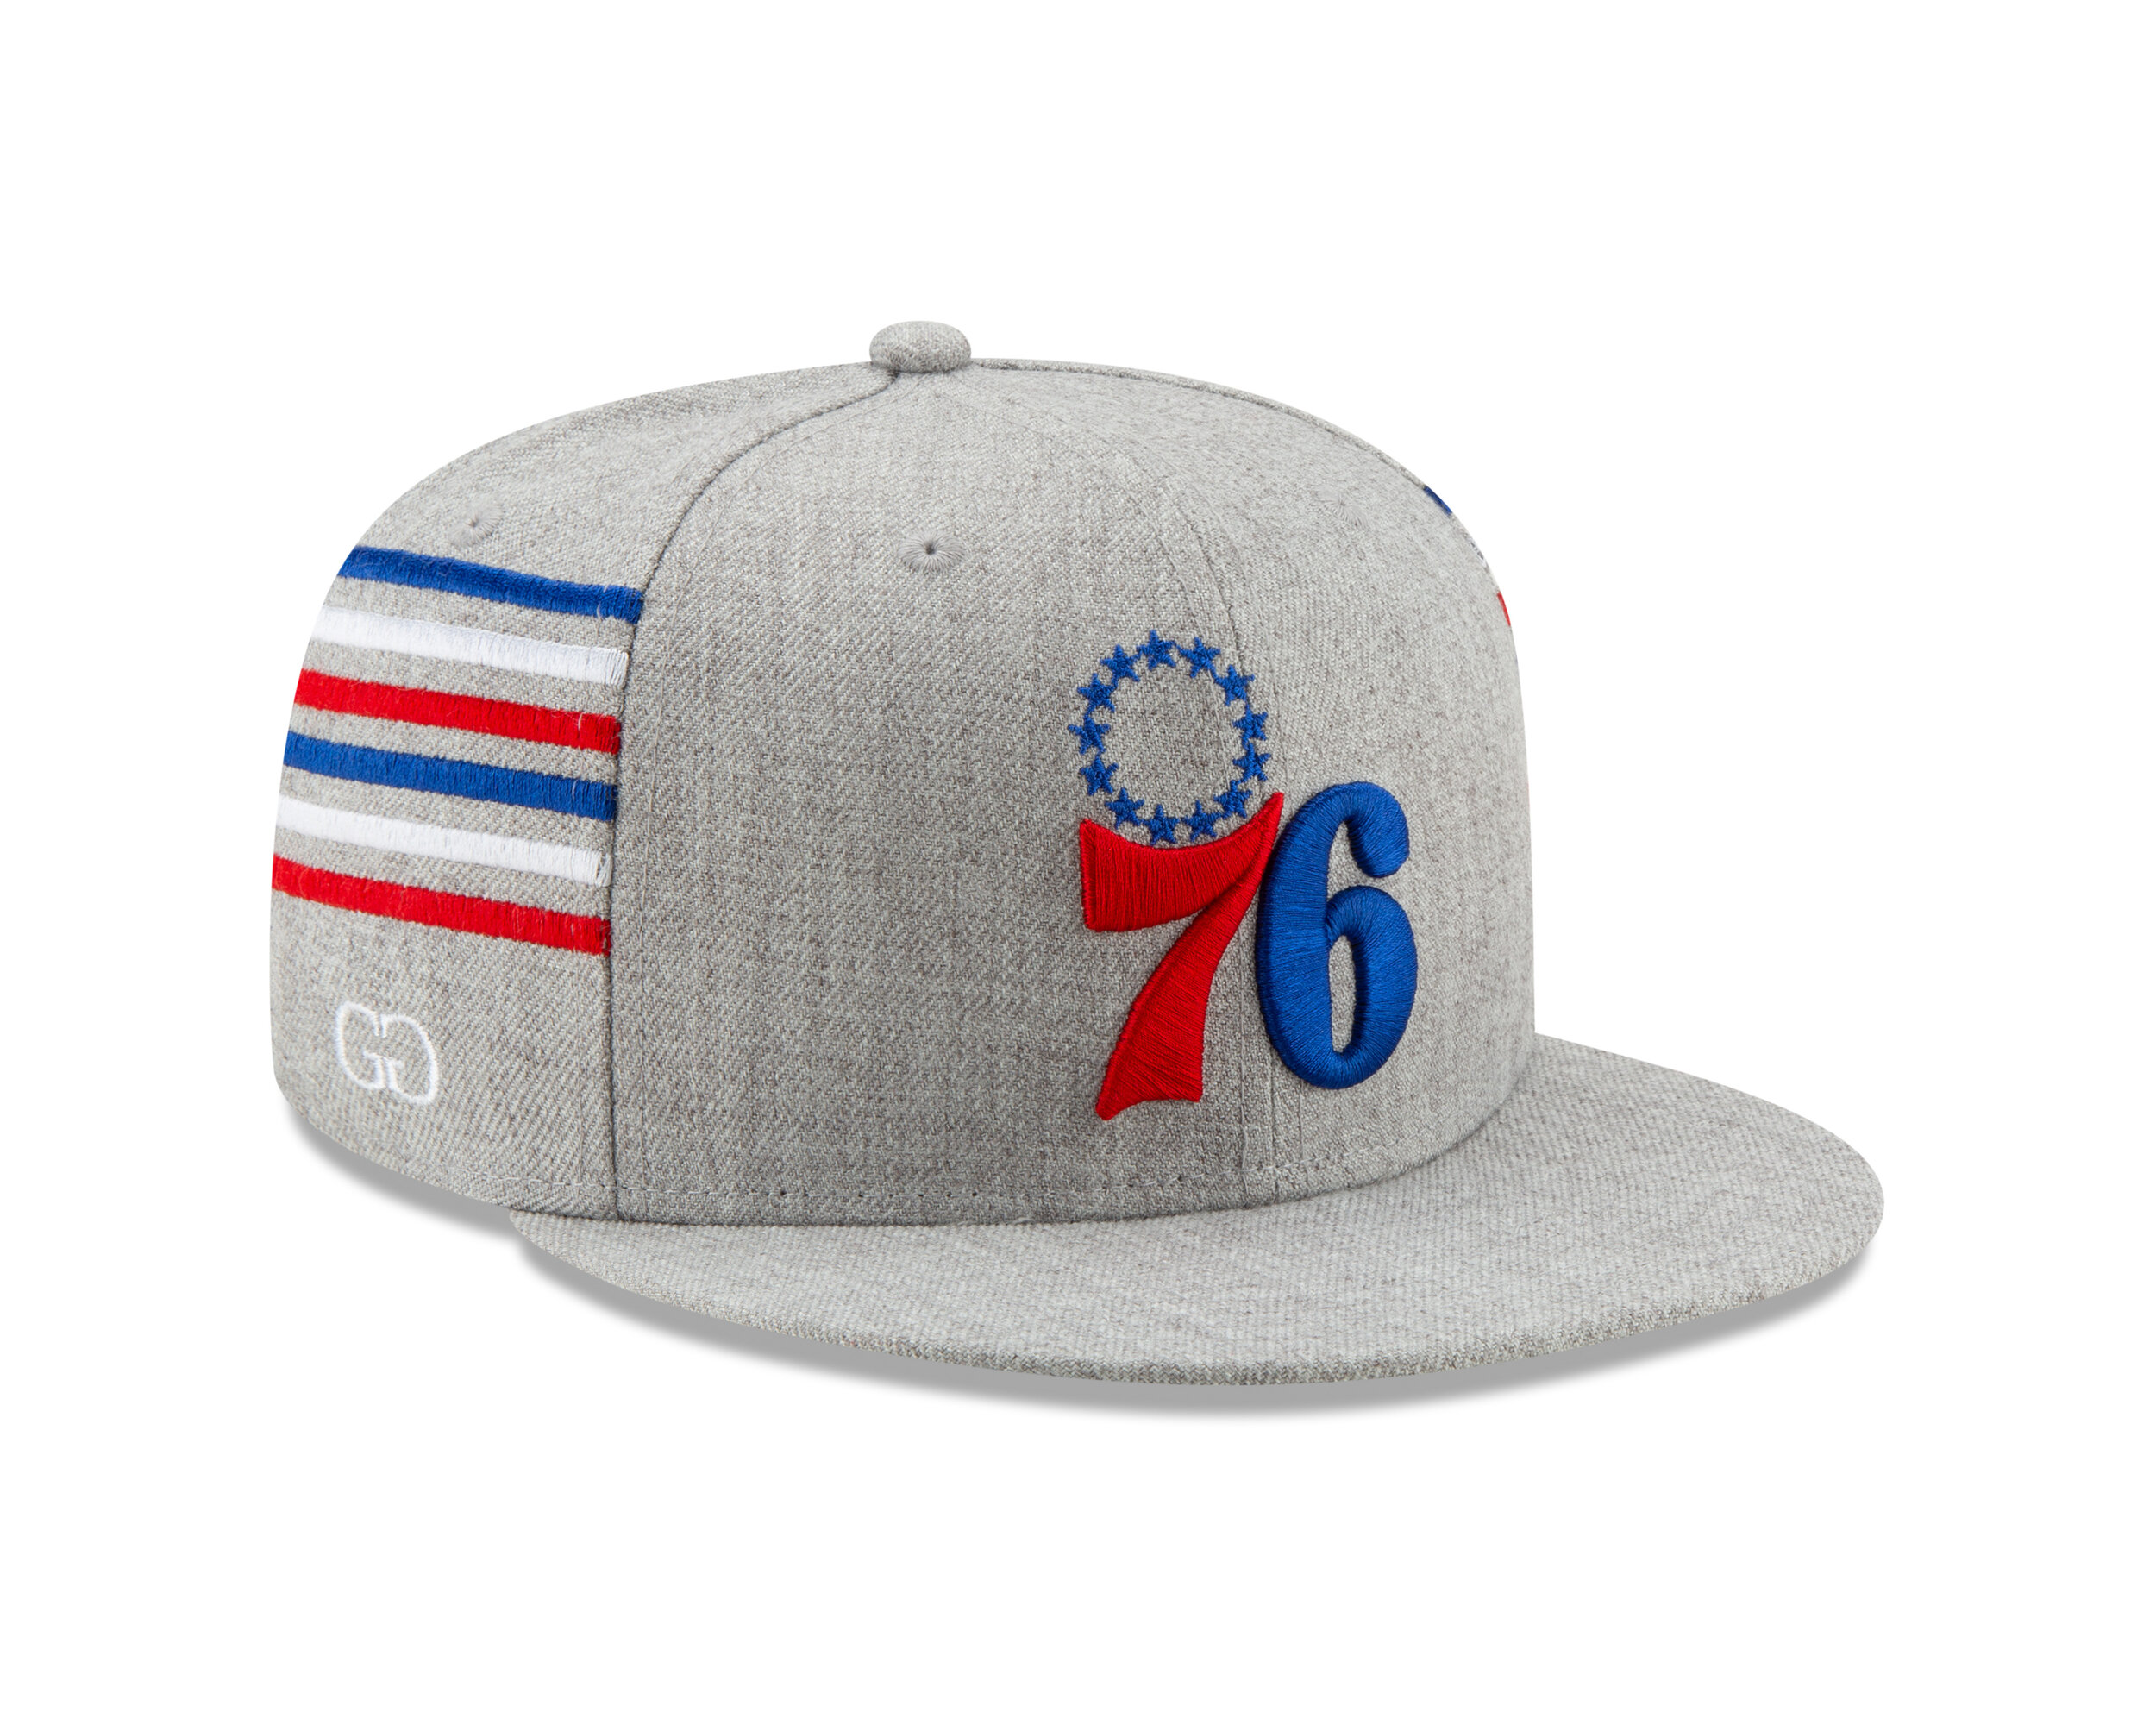 76ers baseball hat